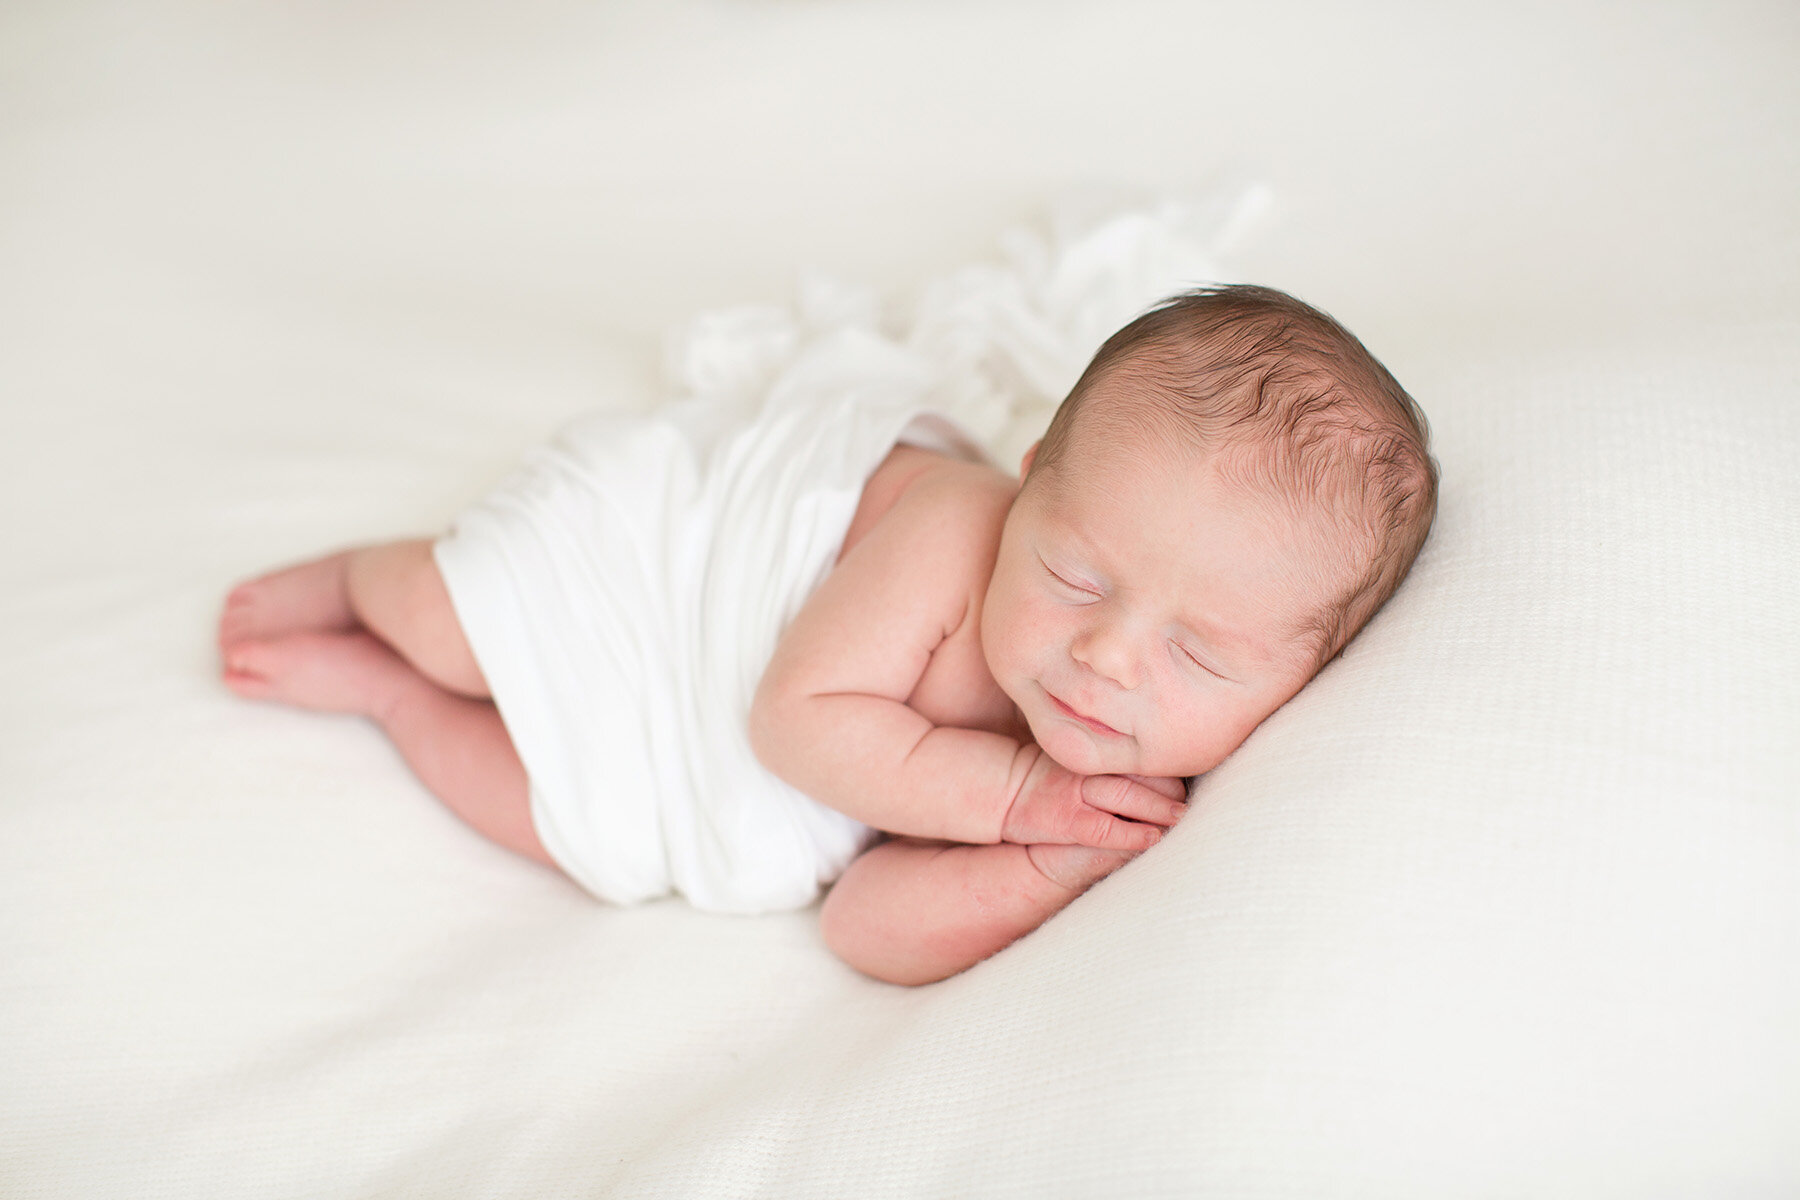 Louisville KY Newborn Photographer | Julie Brock Photography | Maternity | Natural baby photo session | Louisville Photography Studio for babies.jpg